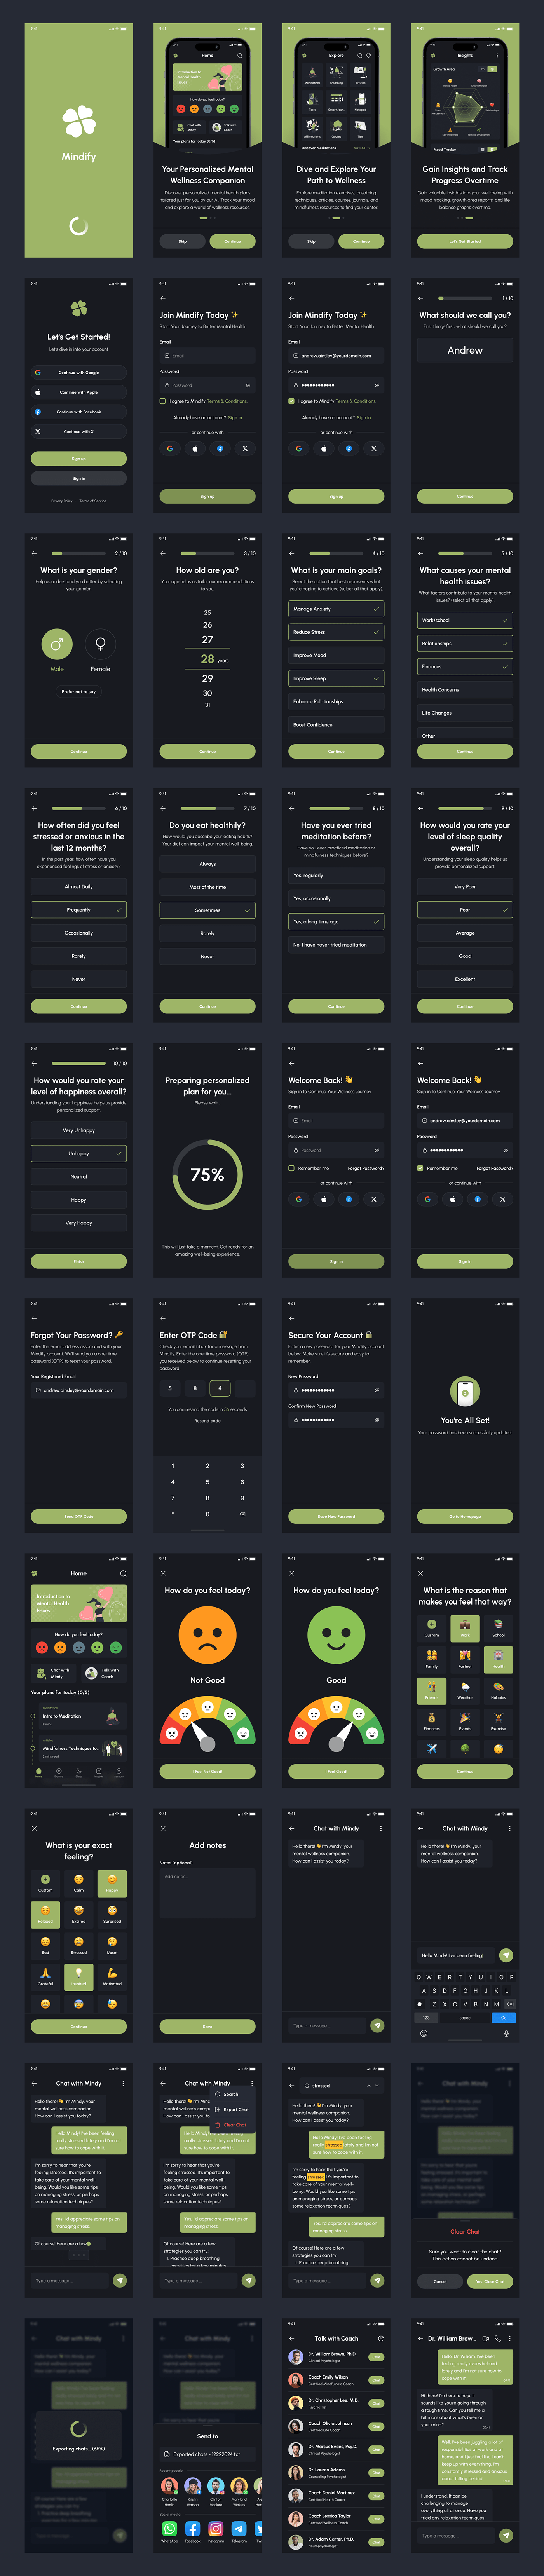 Mindify - AI Mental Health App UI Kit